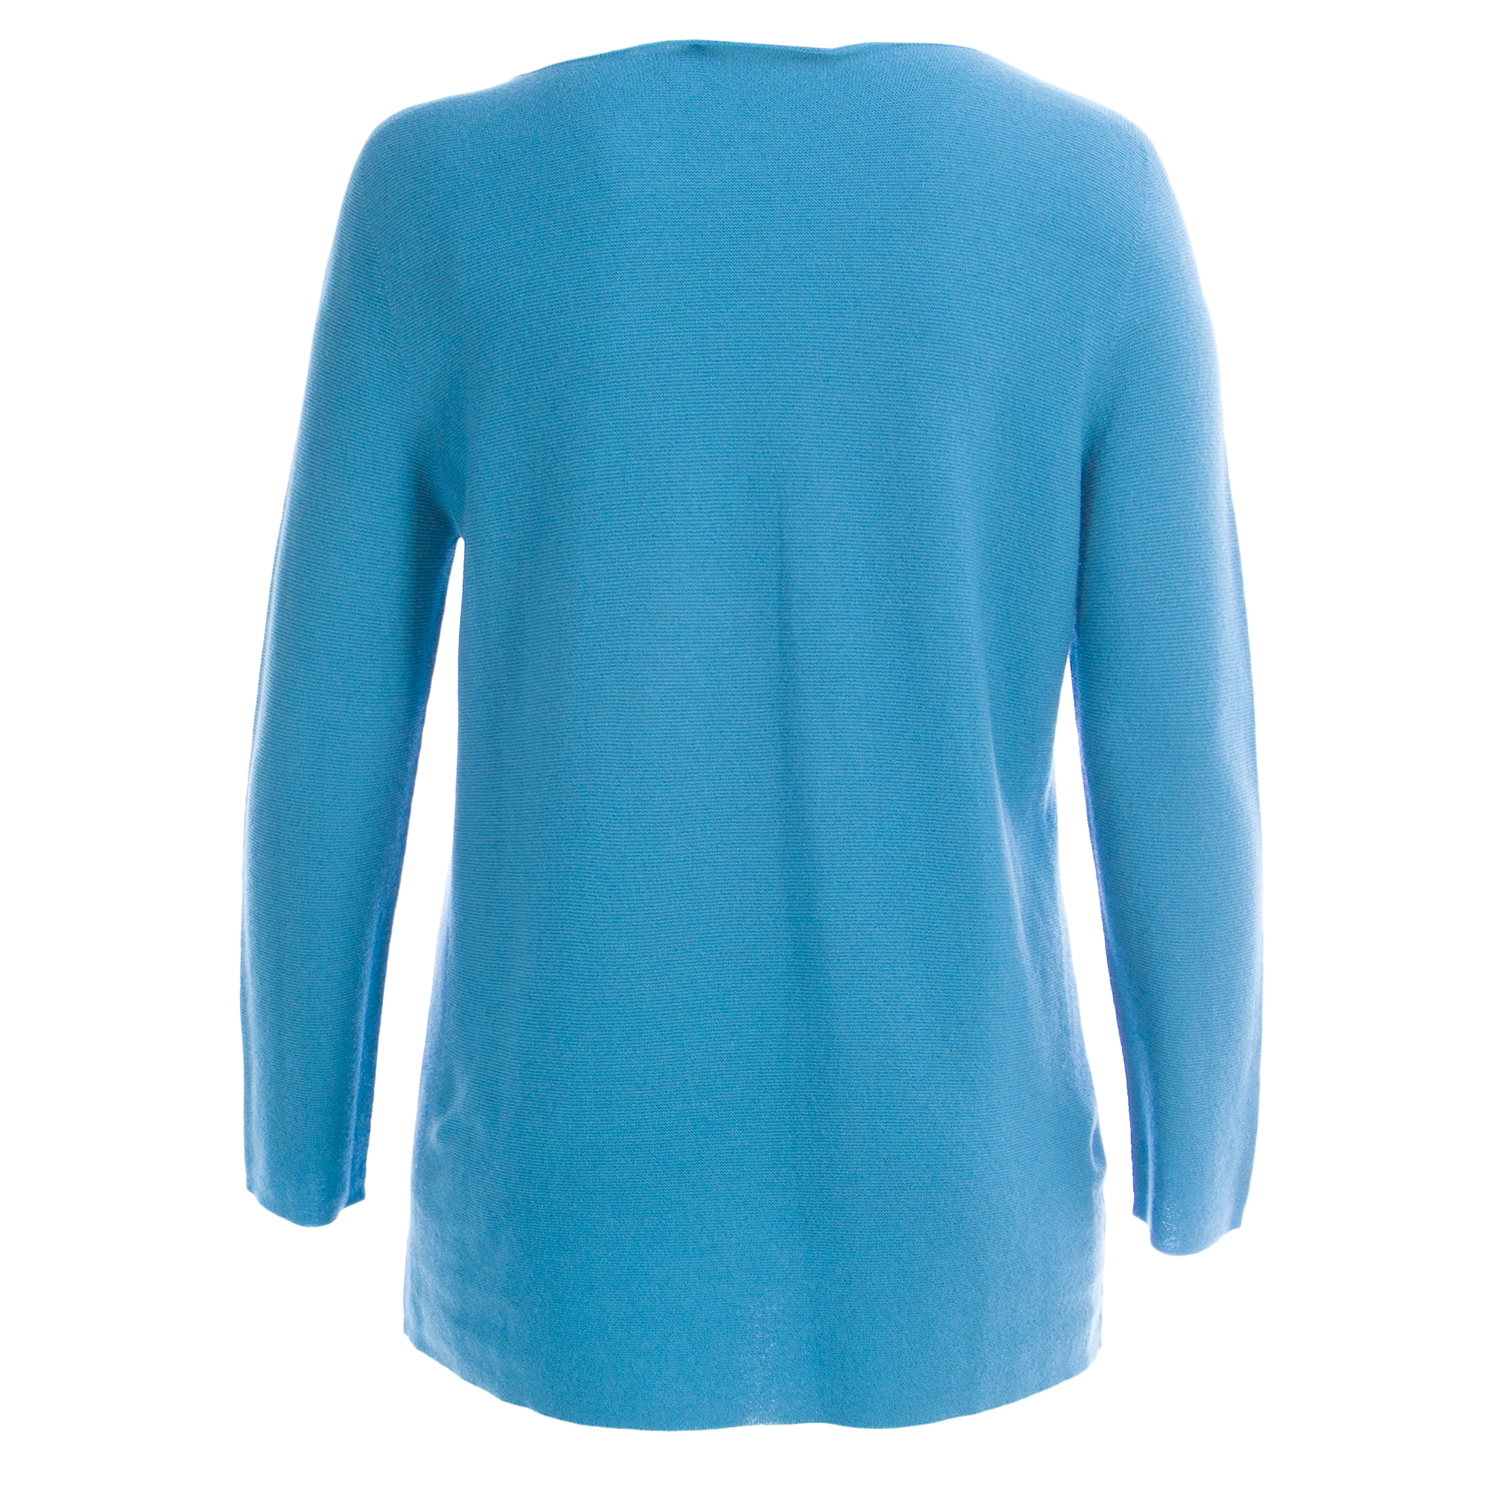 MARINA RINALDI Women's Cerulean Amalfi Cashmere Sweater $990 NWT | eBay